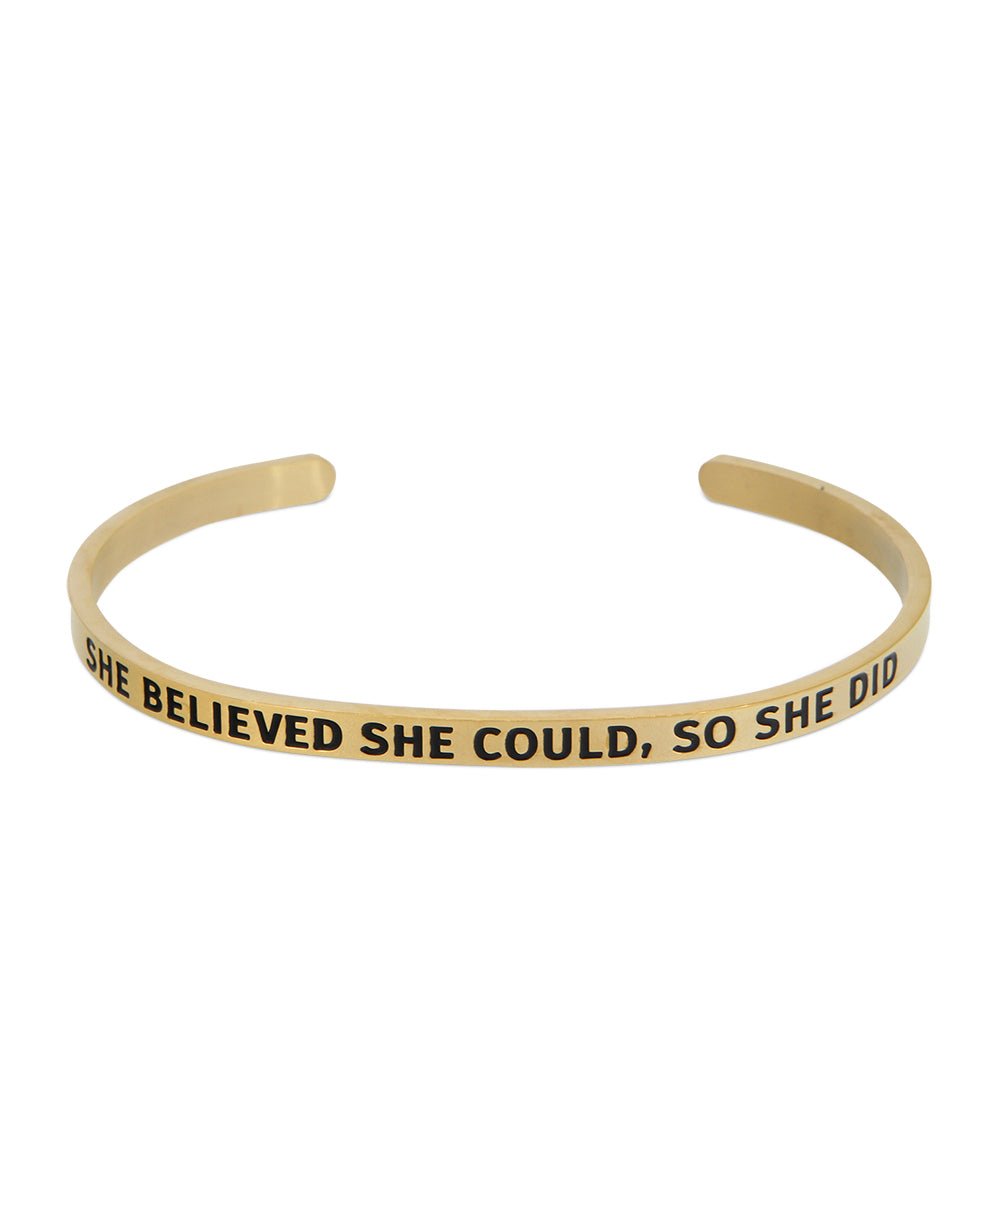 She Believed She Could So She Did, Inspirational Cuff Bracelet - Bracelets Gold